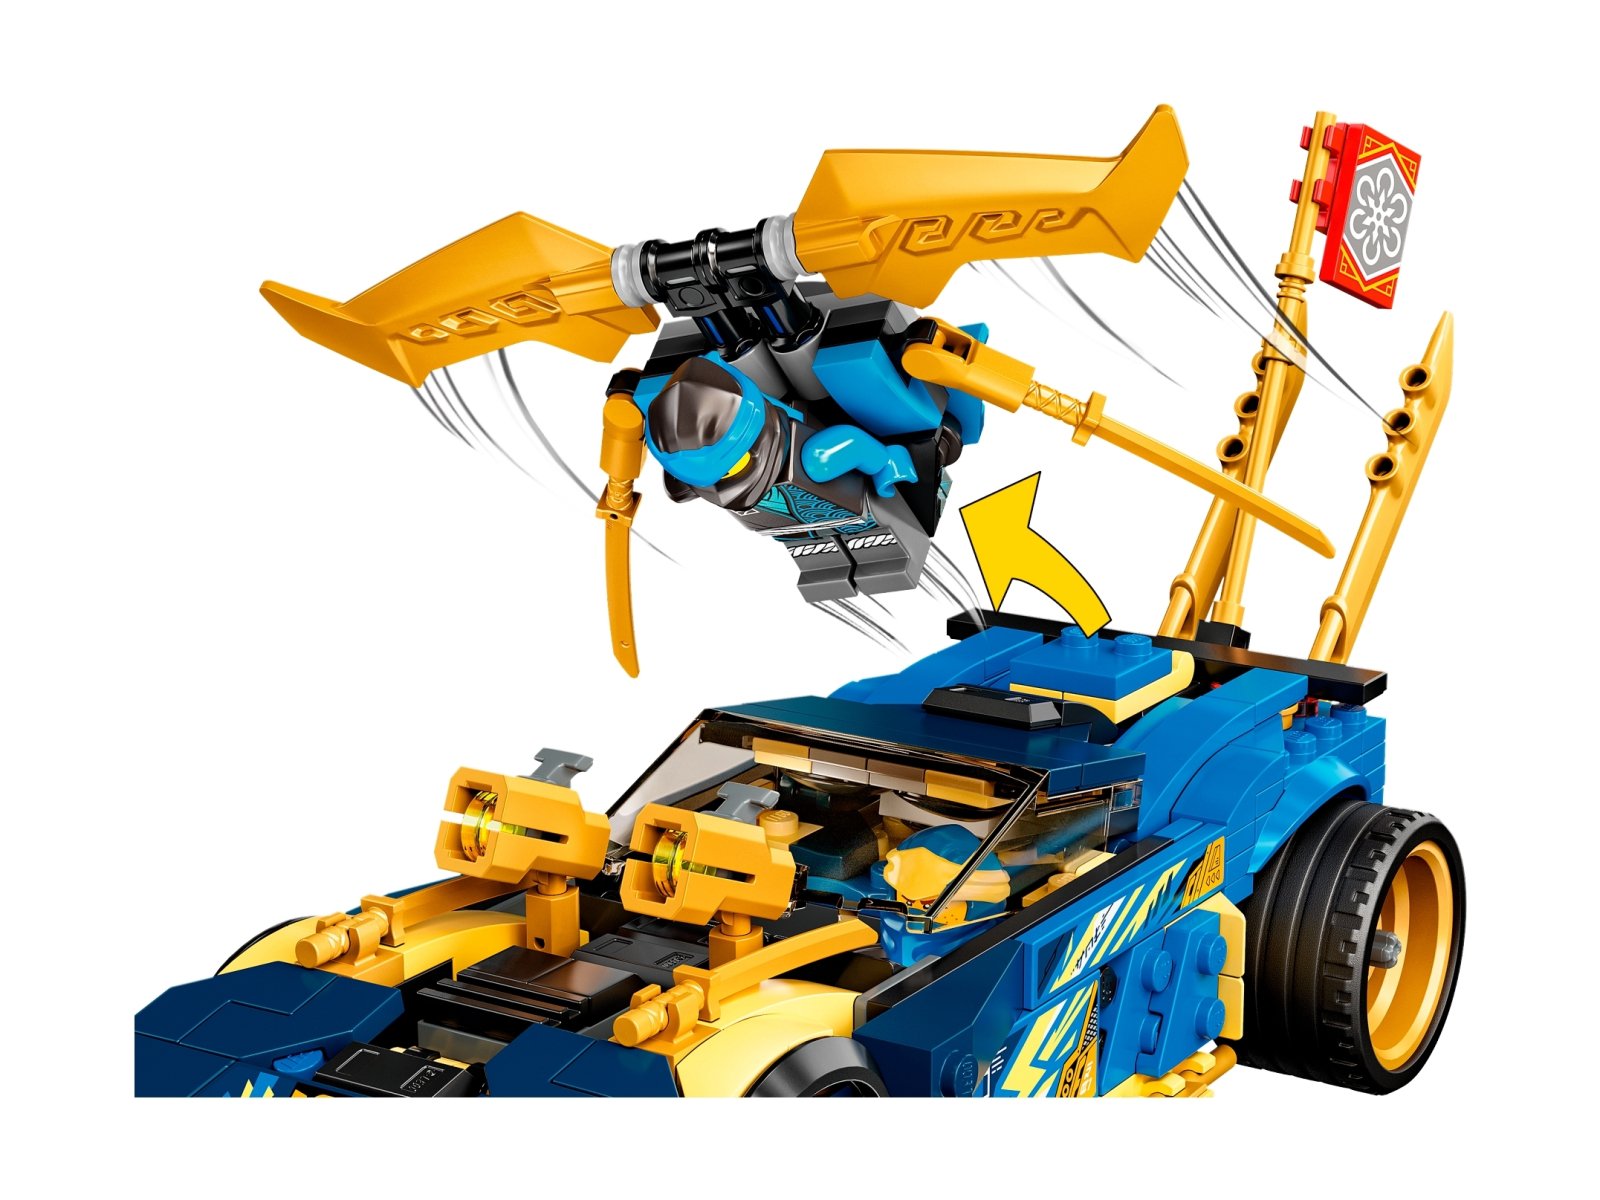 LEGO Ninjago Wyścigówka EVO Jaya i Nyi 71776